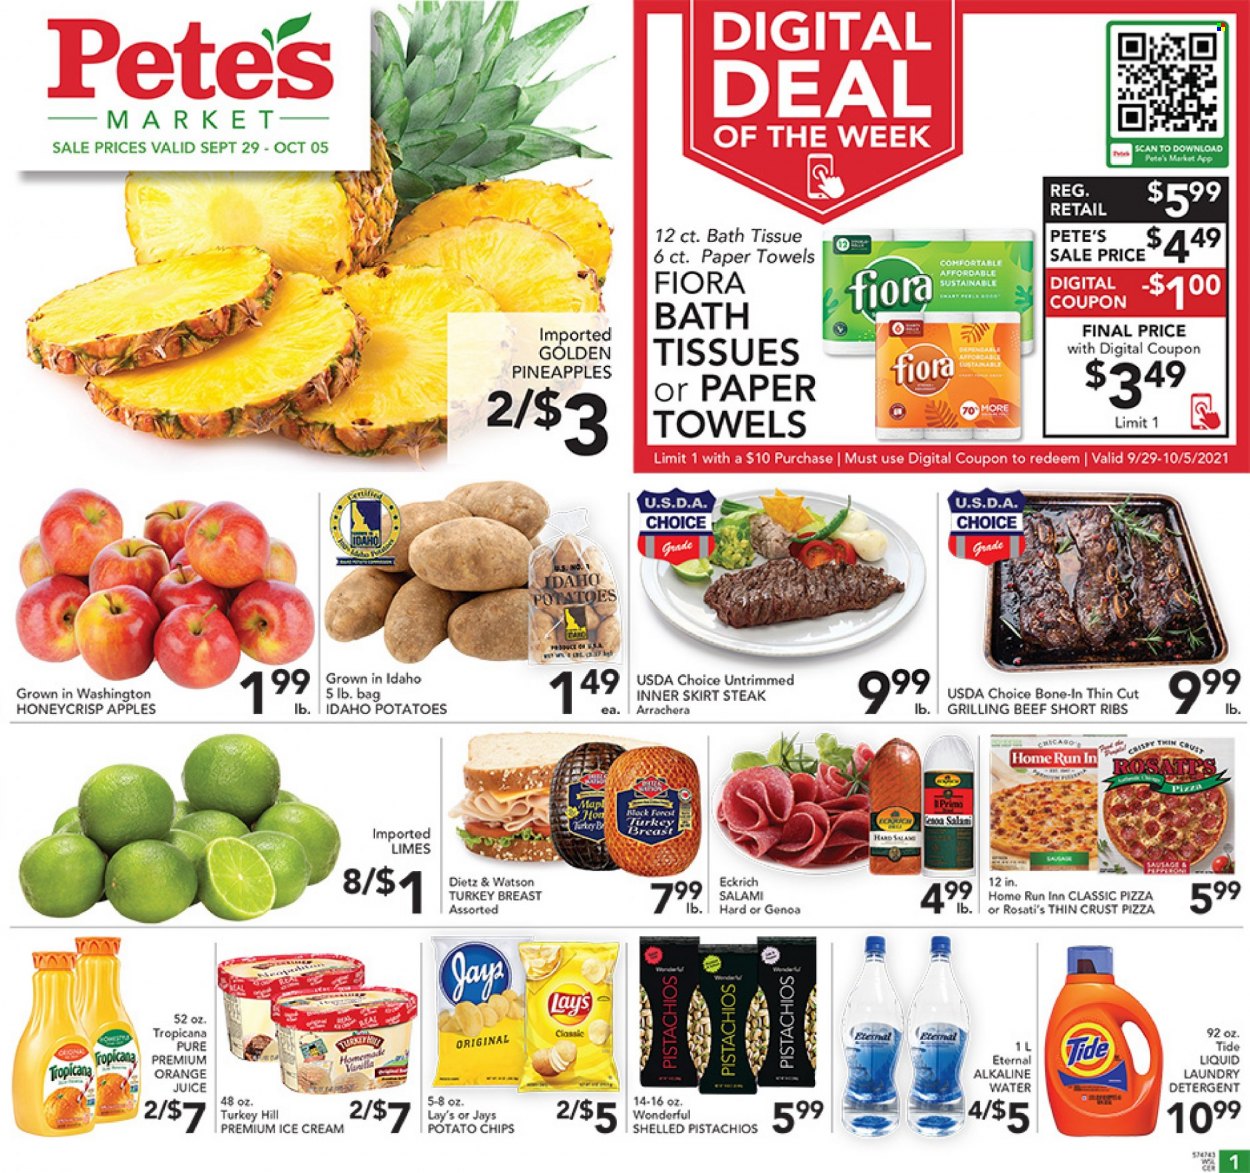 thumbnail - Pete's Fresh Market Flyer - 09/29/2021 - 10/05/2021 - Sales products - potatoes, apples, limes, pineapple, pizza, salami, Dietz & Watson, sausage, ice cream, Lay’s, pistachios, orange juice, juice, alkaline water, turkey breast, beef ribs, steak. Page 1.